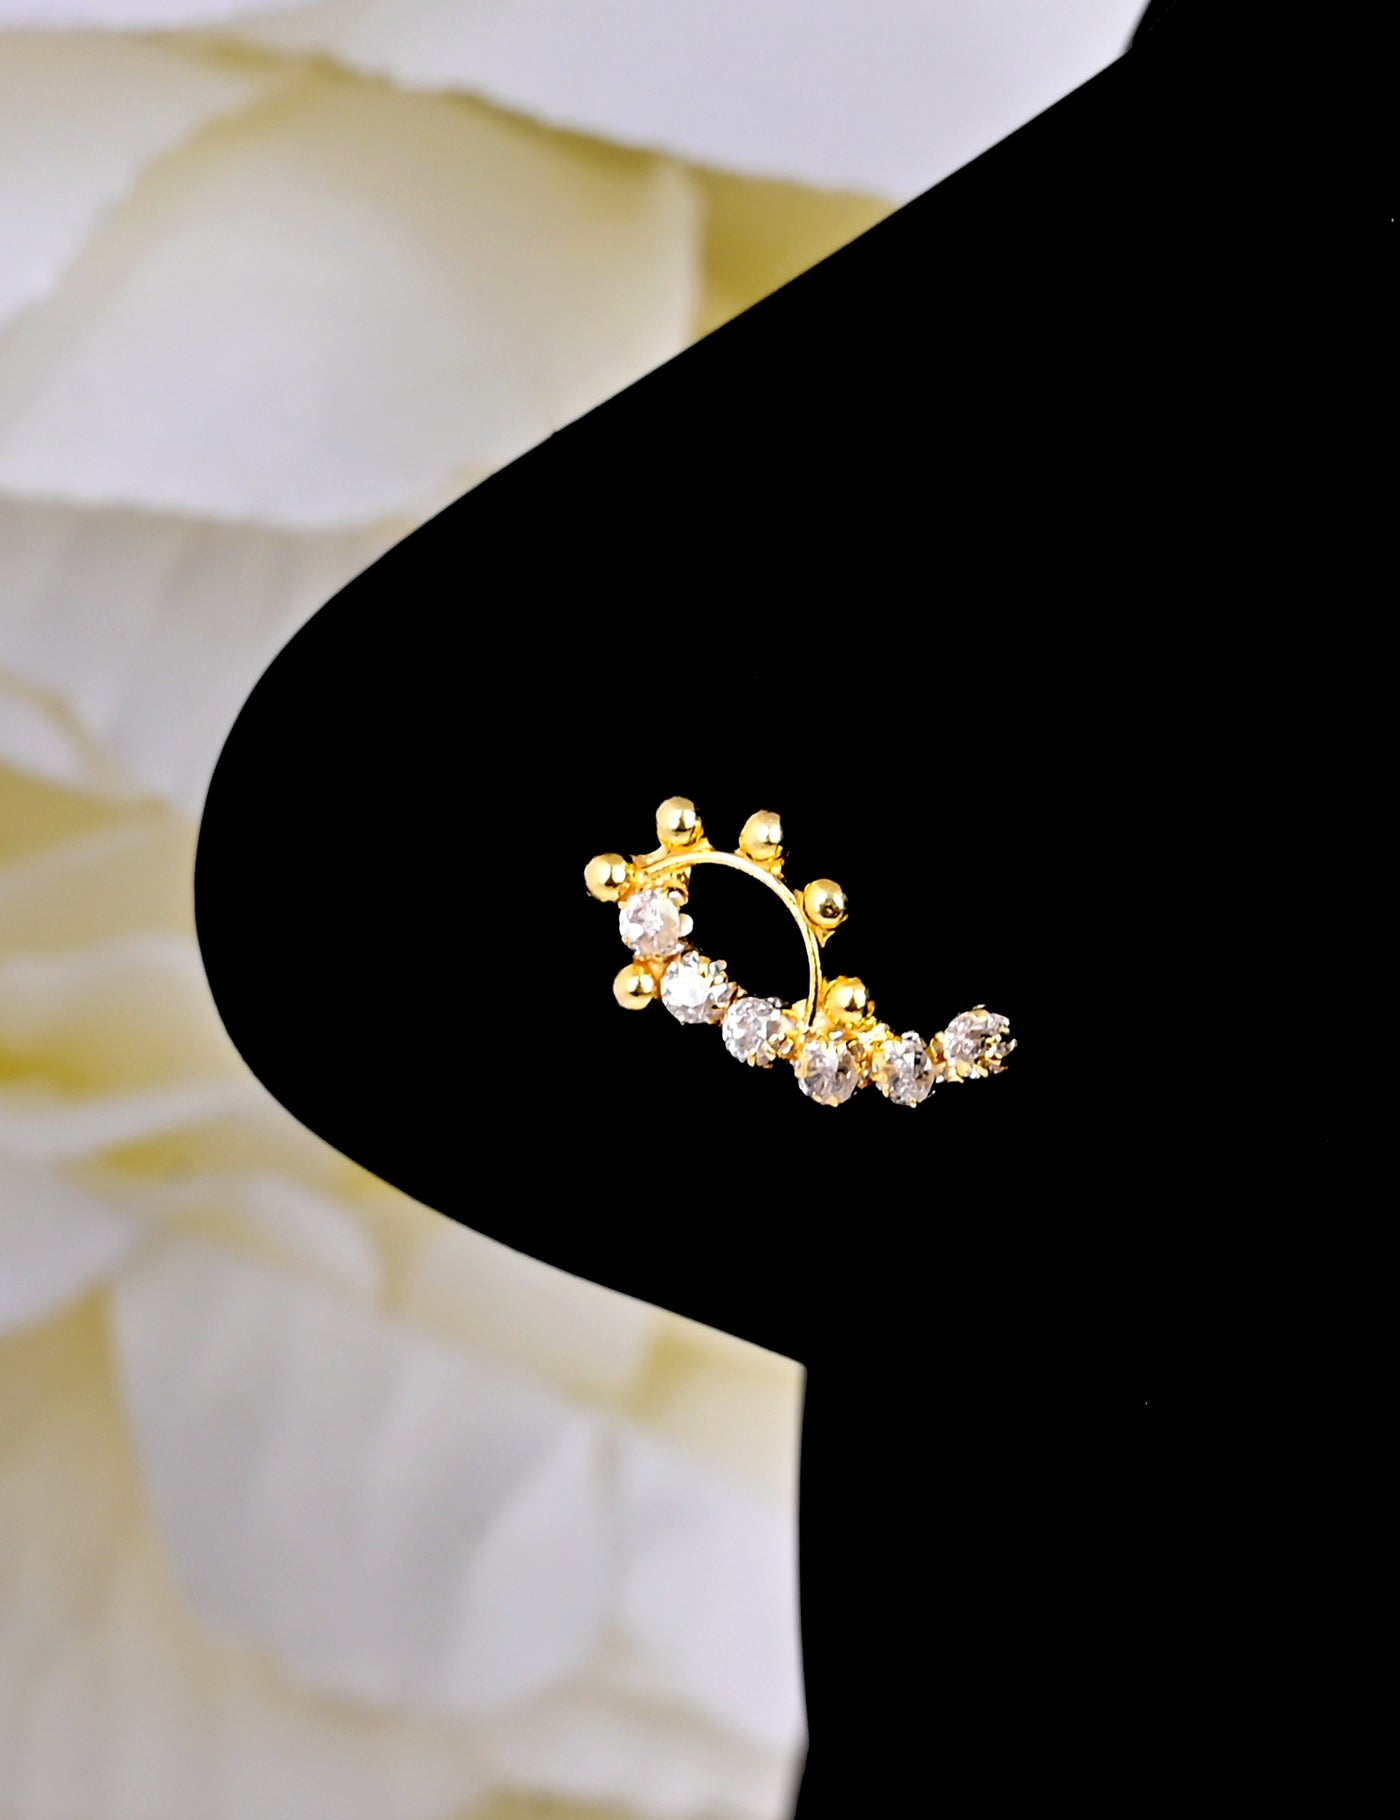 1mm CZ Diamond Golden Coating Women's Nose Jewelry